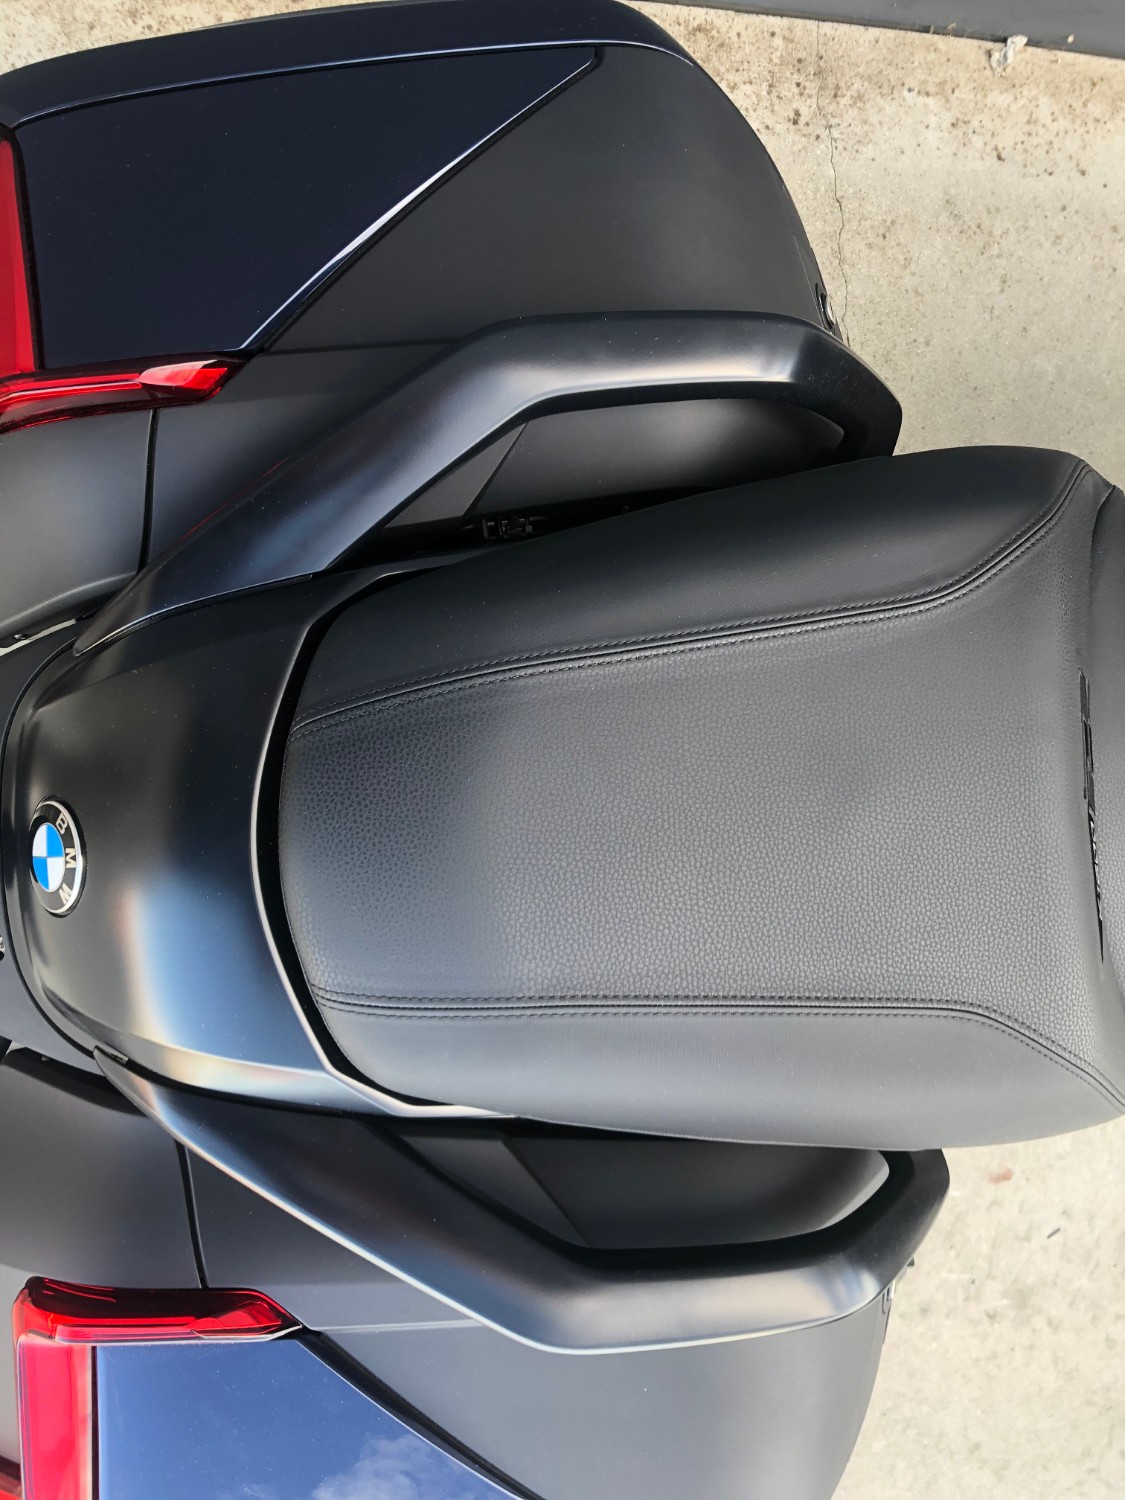 2019 BMW K1600 B Deluxe Motorcycle Image 36